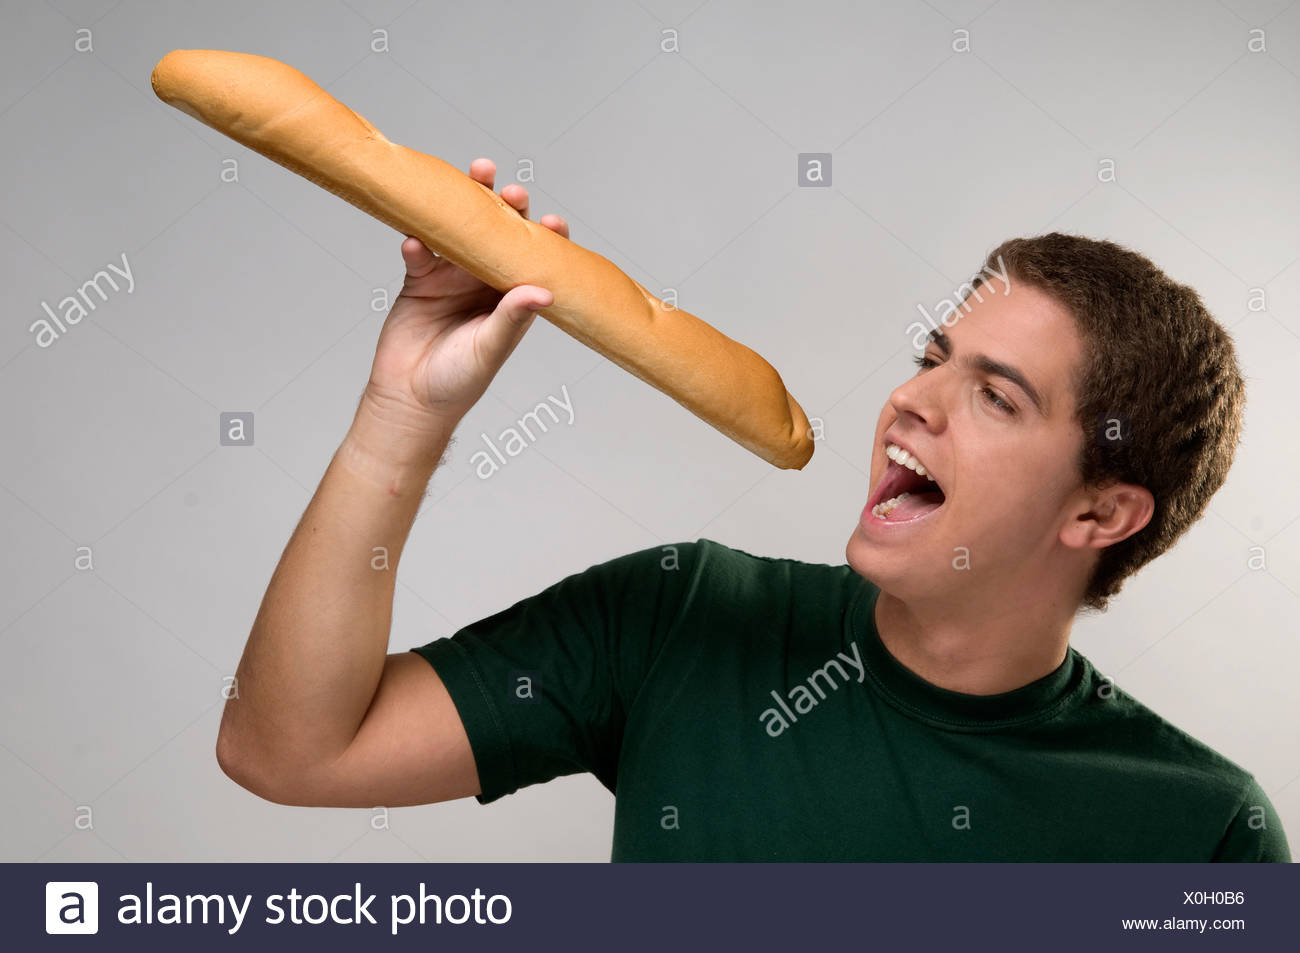 Portrait Of A Man Holding A Baguette Stock Photo Alamy